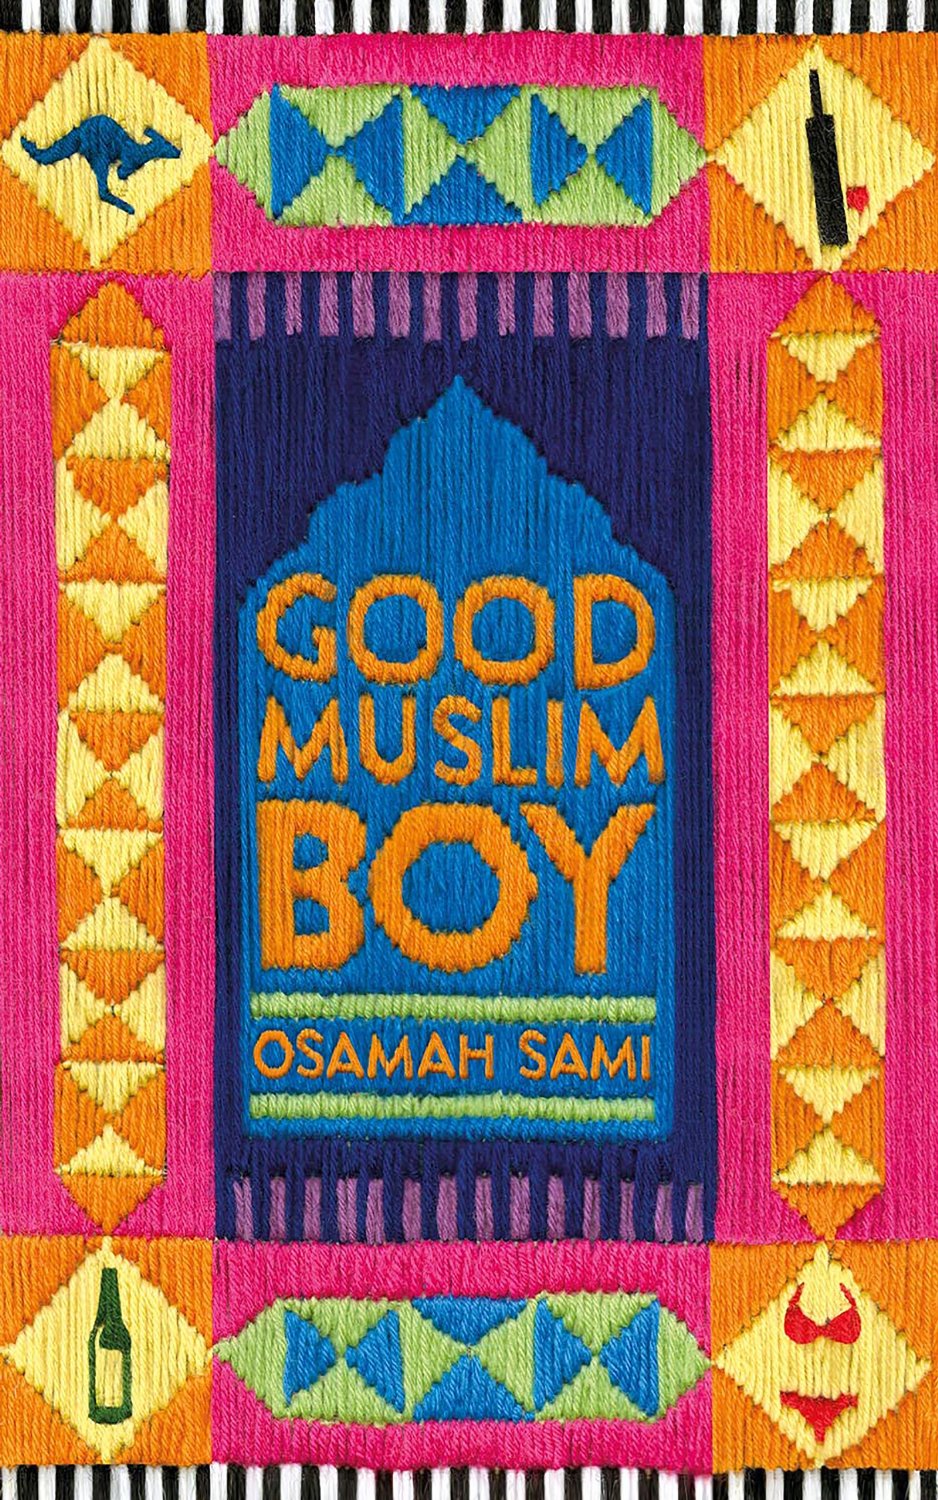 Osamah Sami's book - Good Muslim Boy